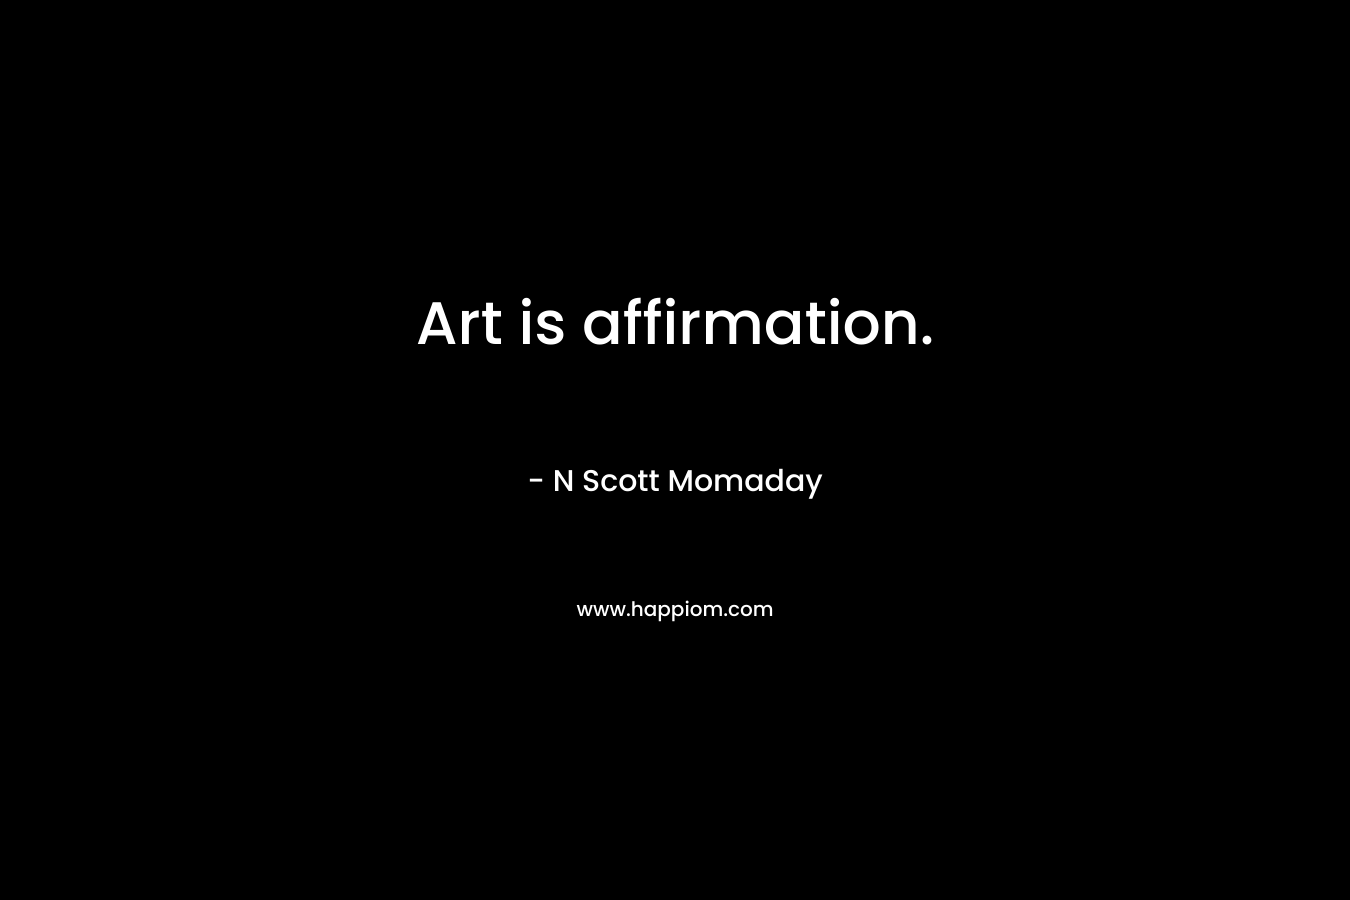 Art is affirmation.